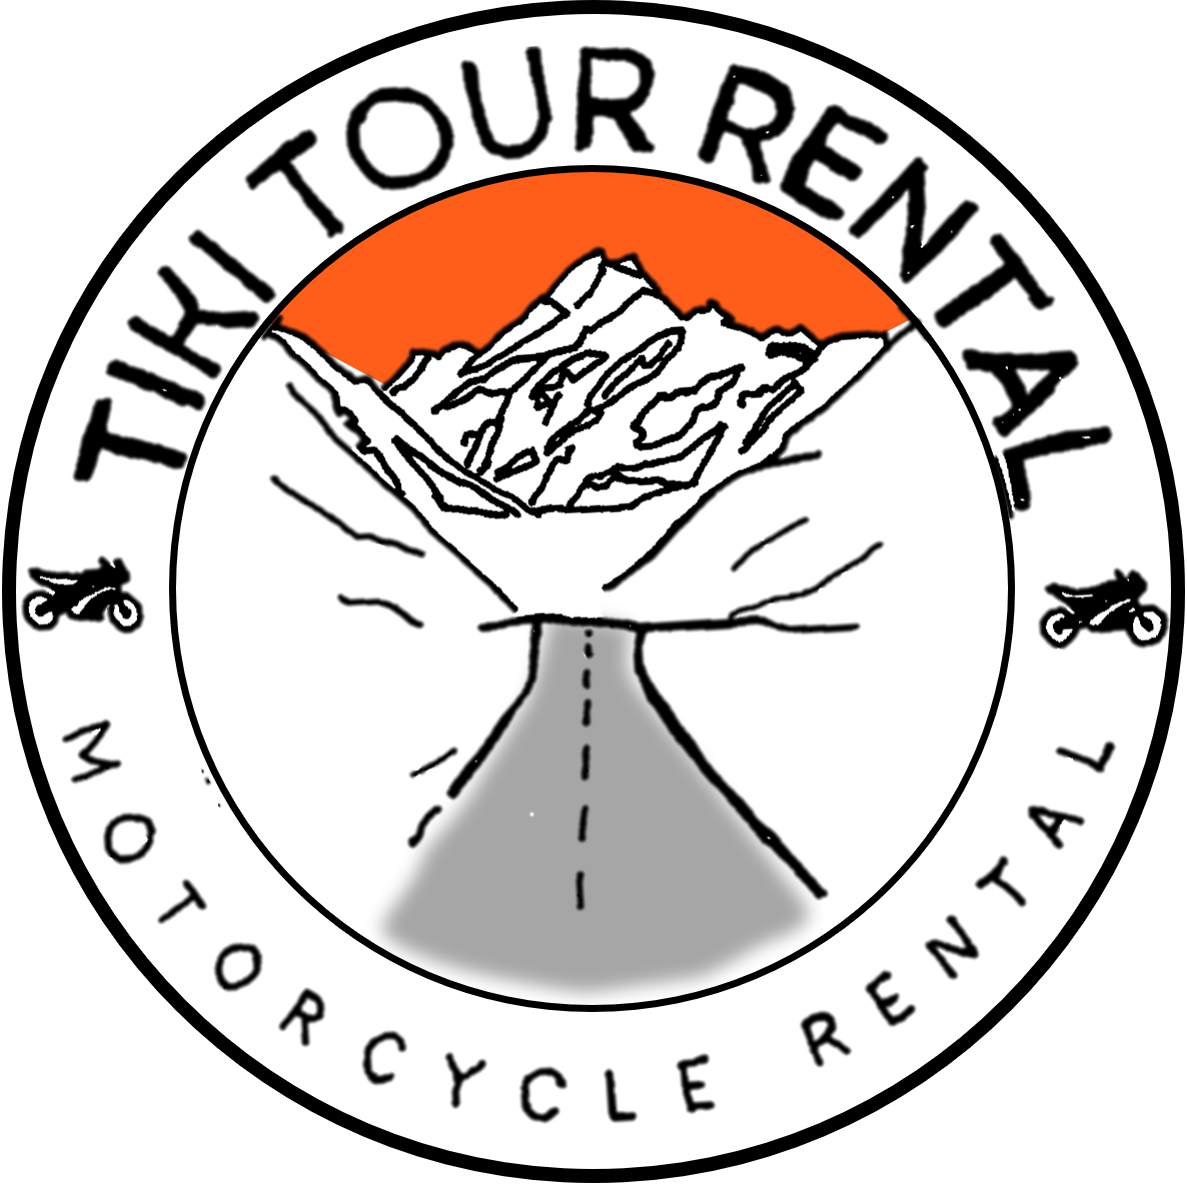 Rental and hire motorcycles Christchurch | Tiki Tour Motorcycle Rental